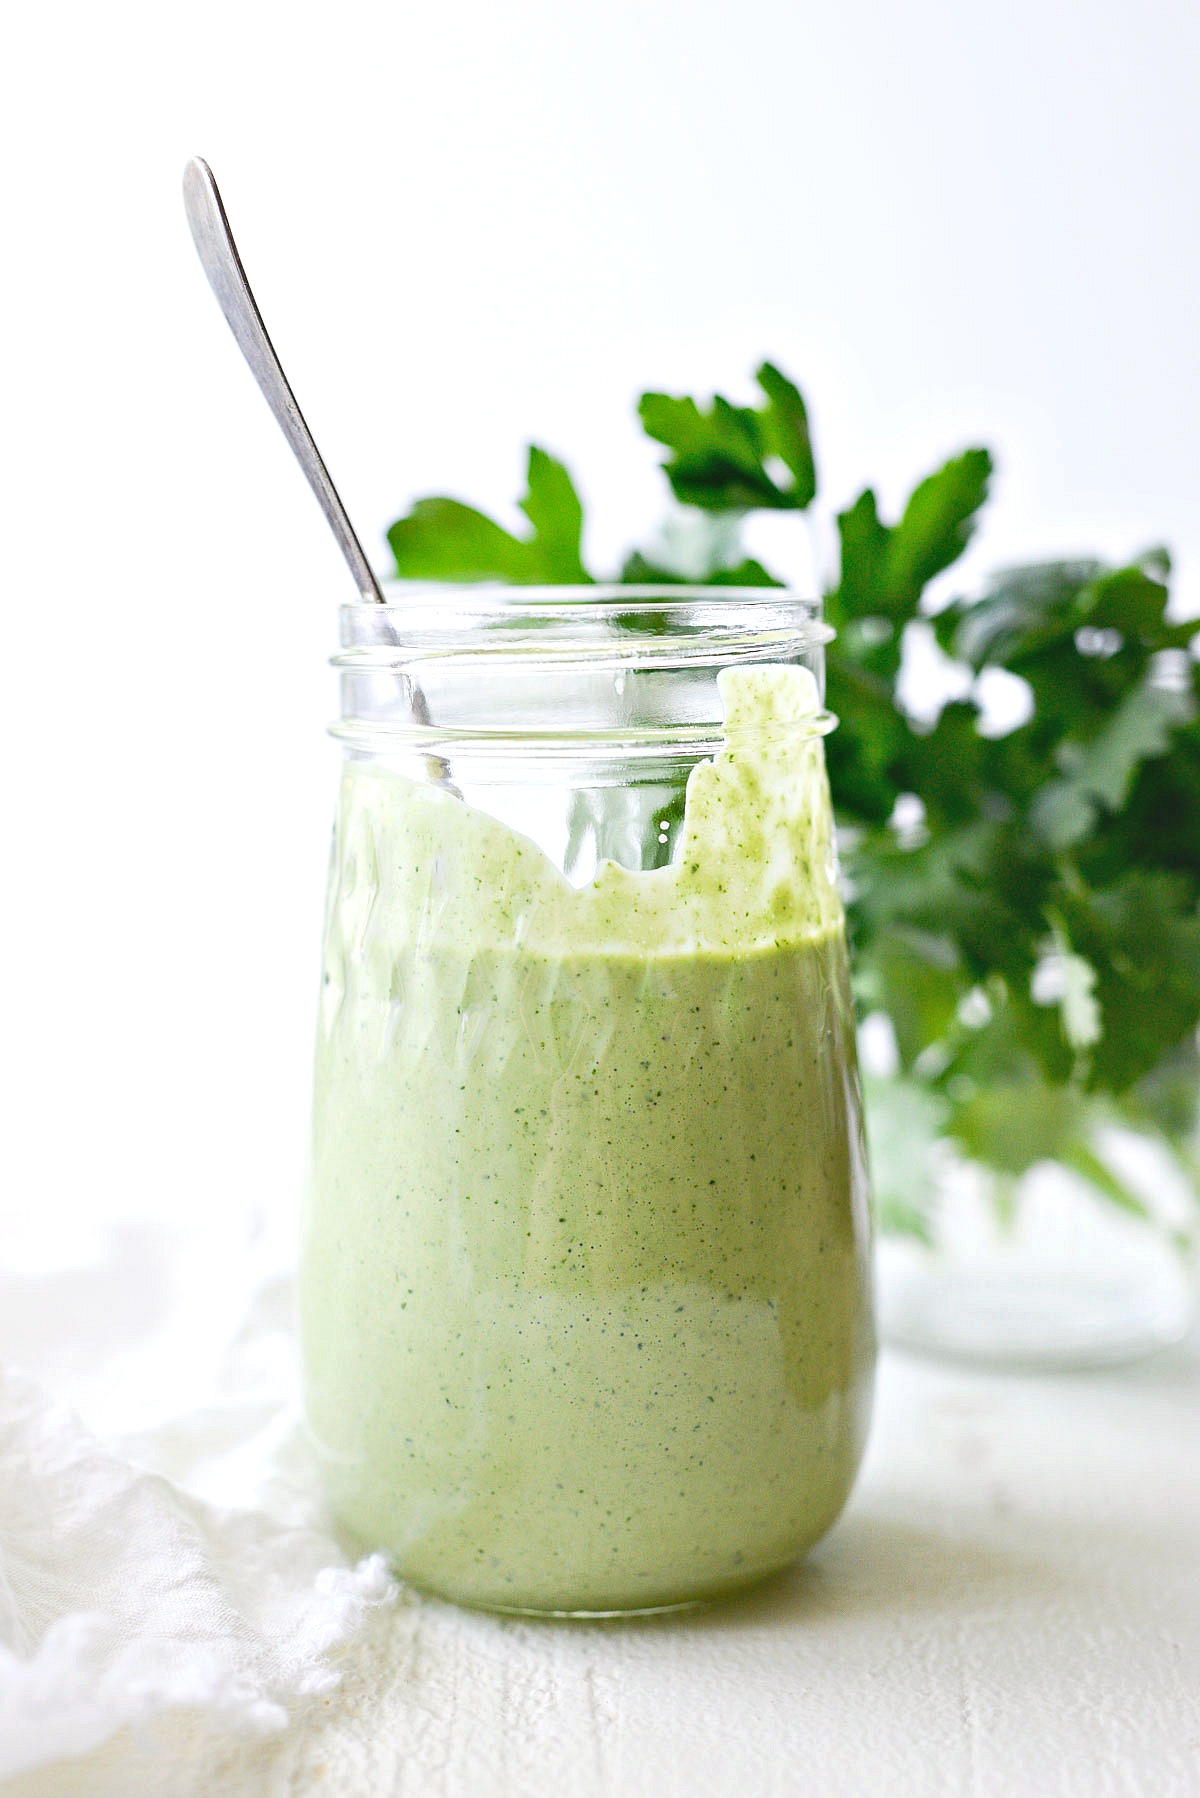 https://www.simplyscratch.com/wp-content/uploads/2020/08/Greek-Yogurt-Green-Goddess-Salad-Dressing-l-SimplyScratch.com-green-goddess-herbs-fromscratch-homemade-saladdressing-creamy-13.jpg